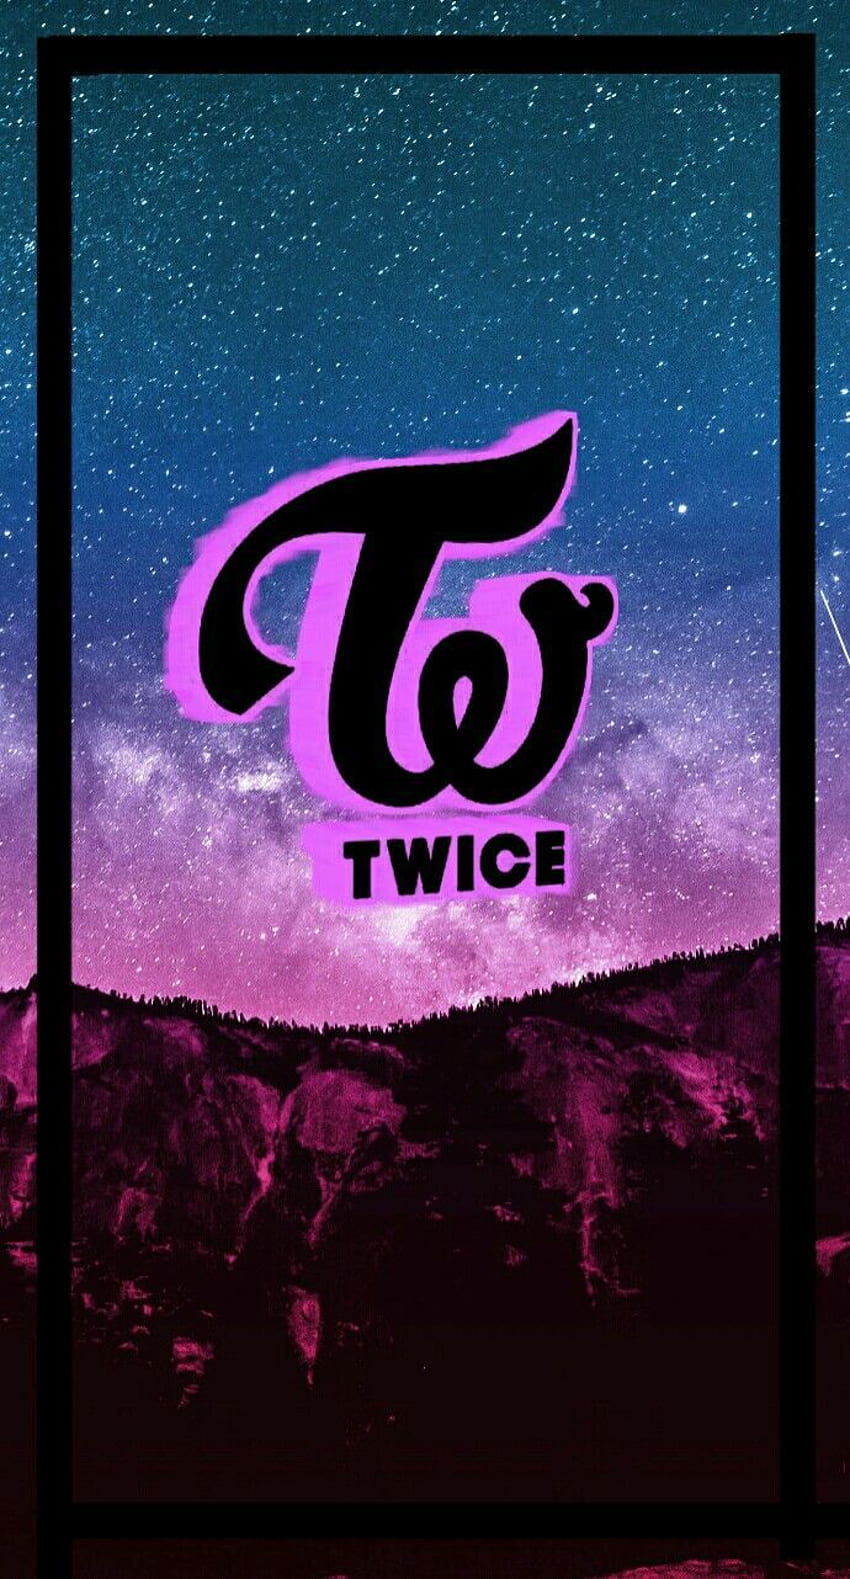 Twice Logo Kpop Background Wallpaper Stock Illustration 1407261284